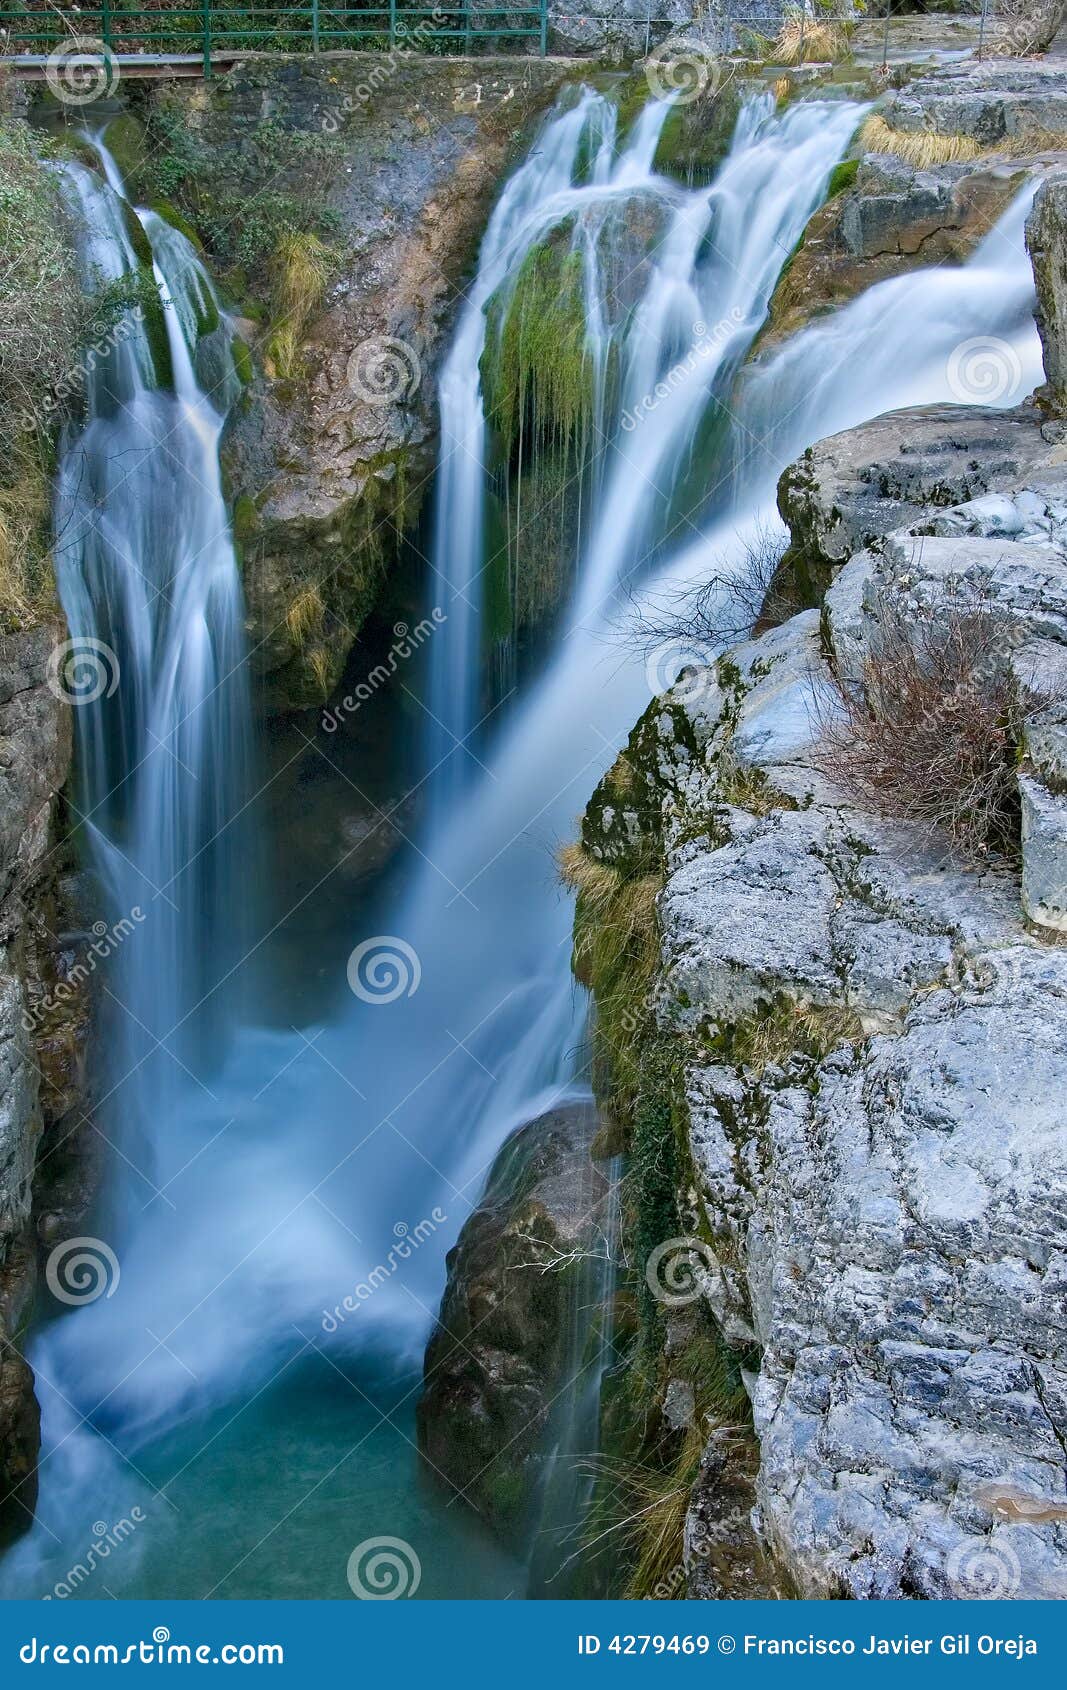 waterfall of molino de aso in ordesa